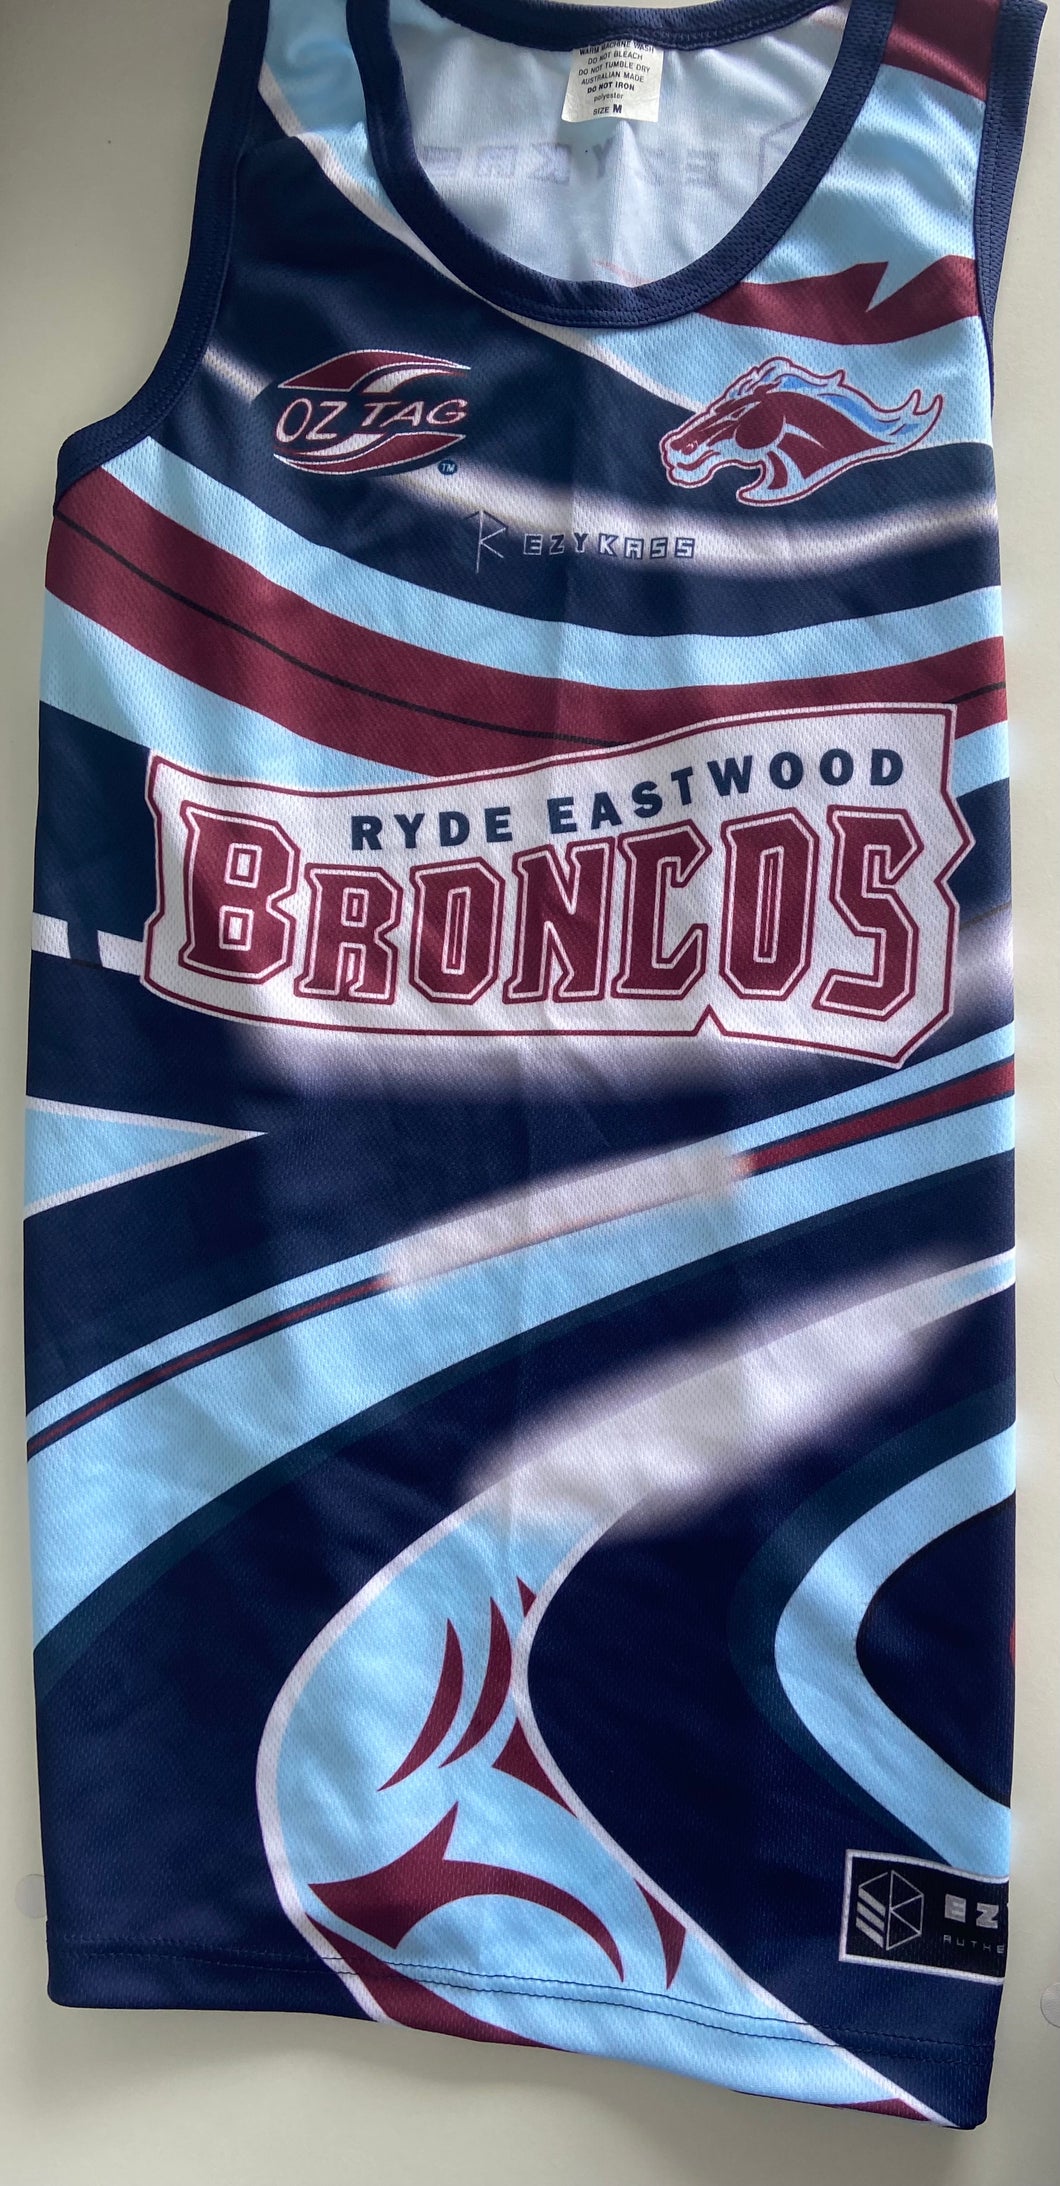 Ryde Eastwood Broncos Singlet